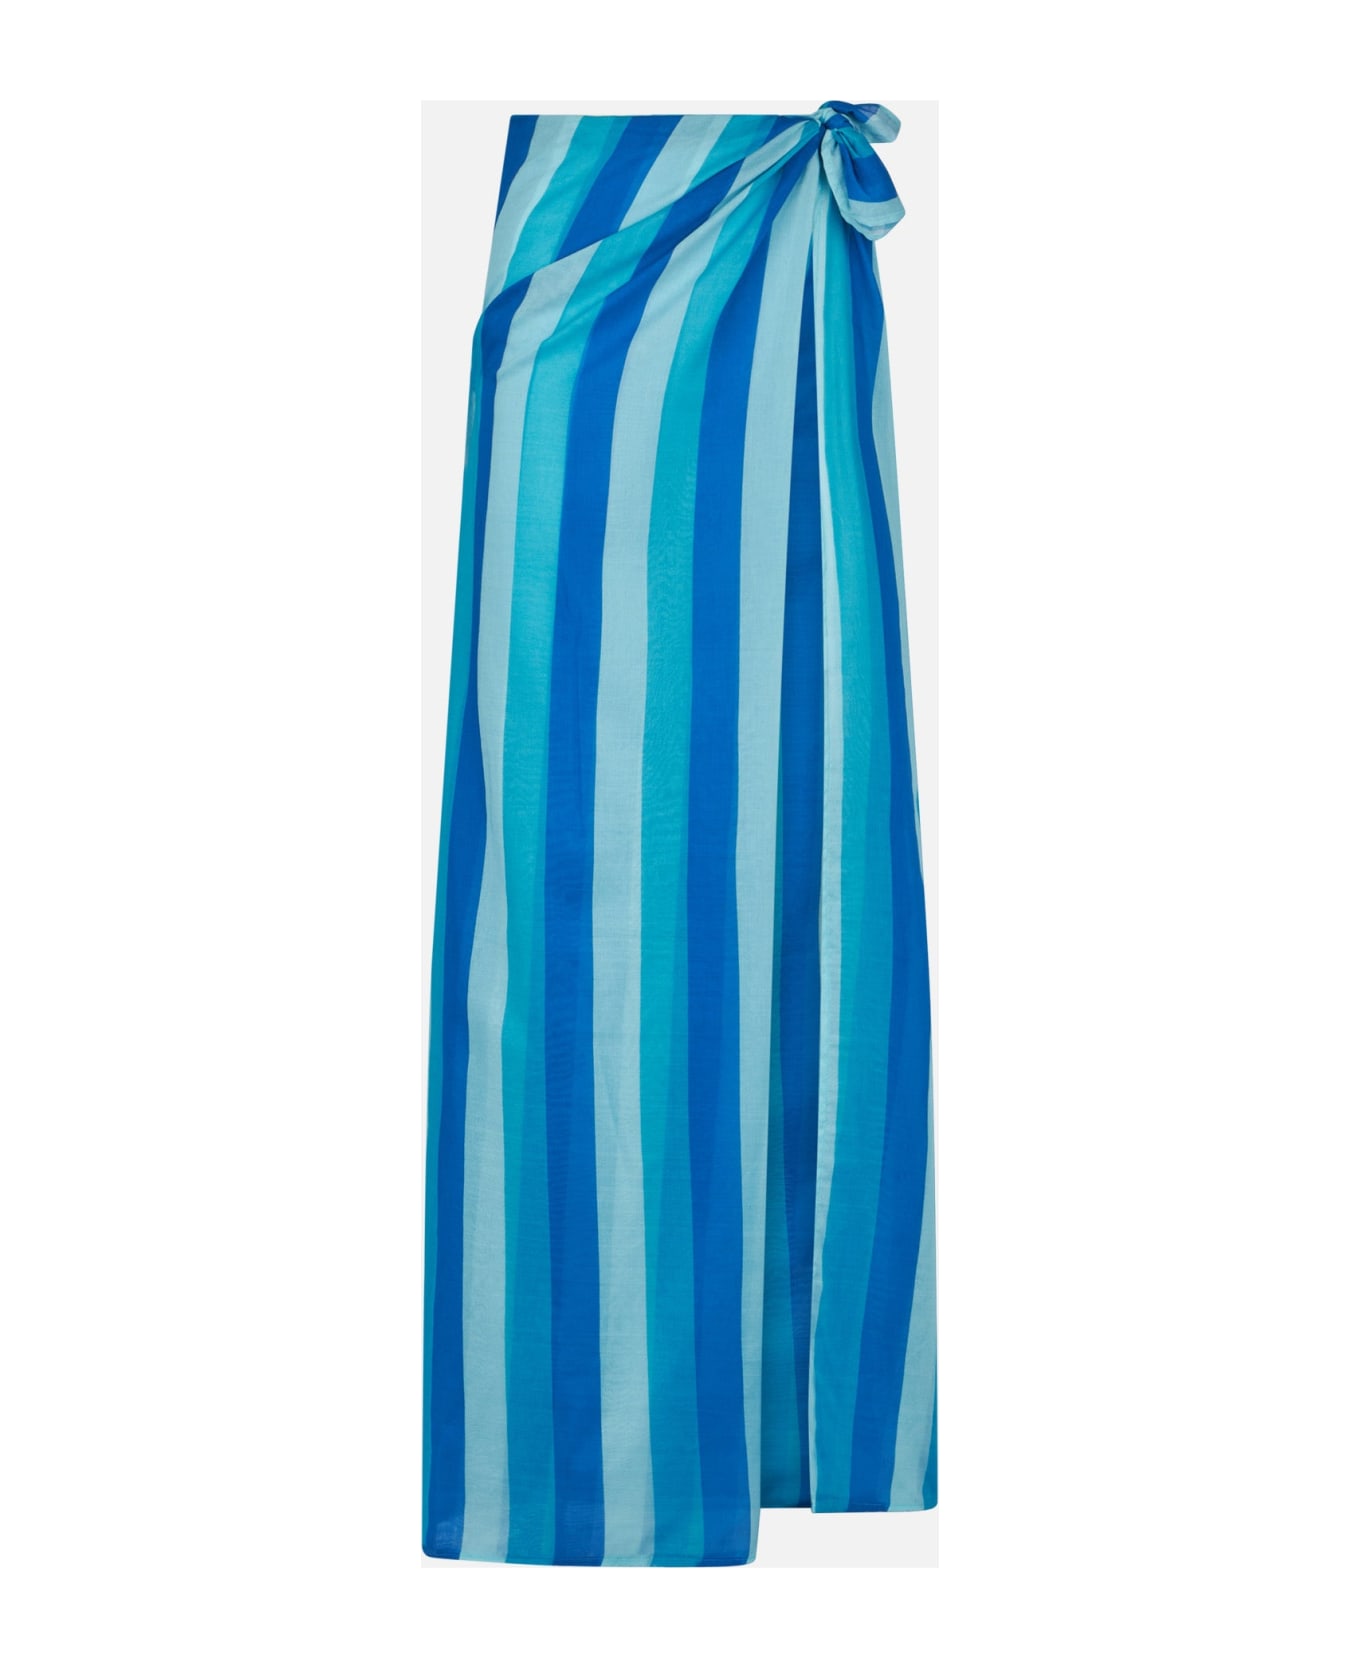 MC2 Saint Barth Cotton Pareo Skirt With Striped Print - BLUE